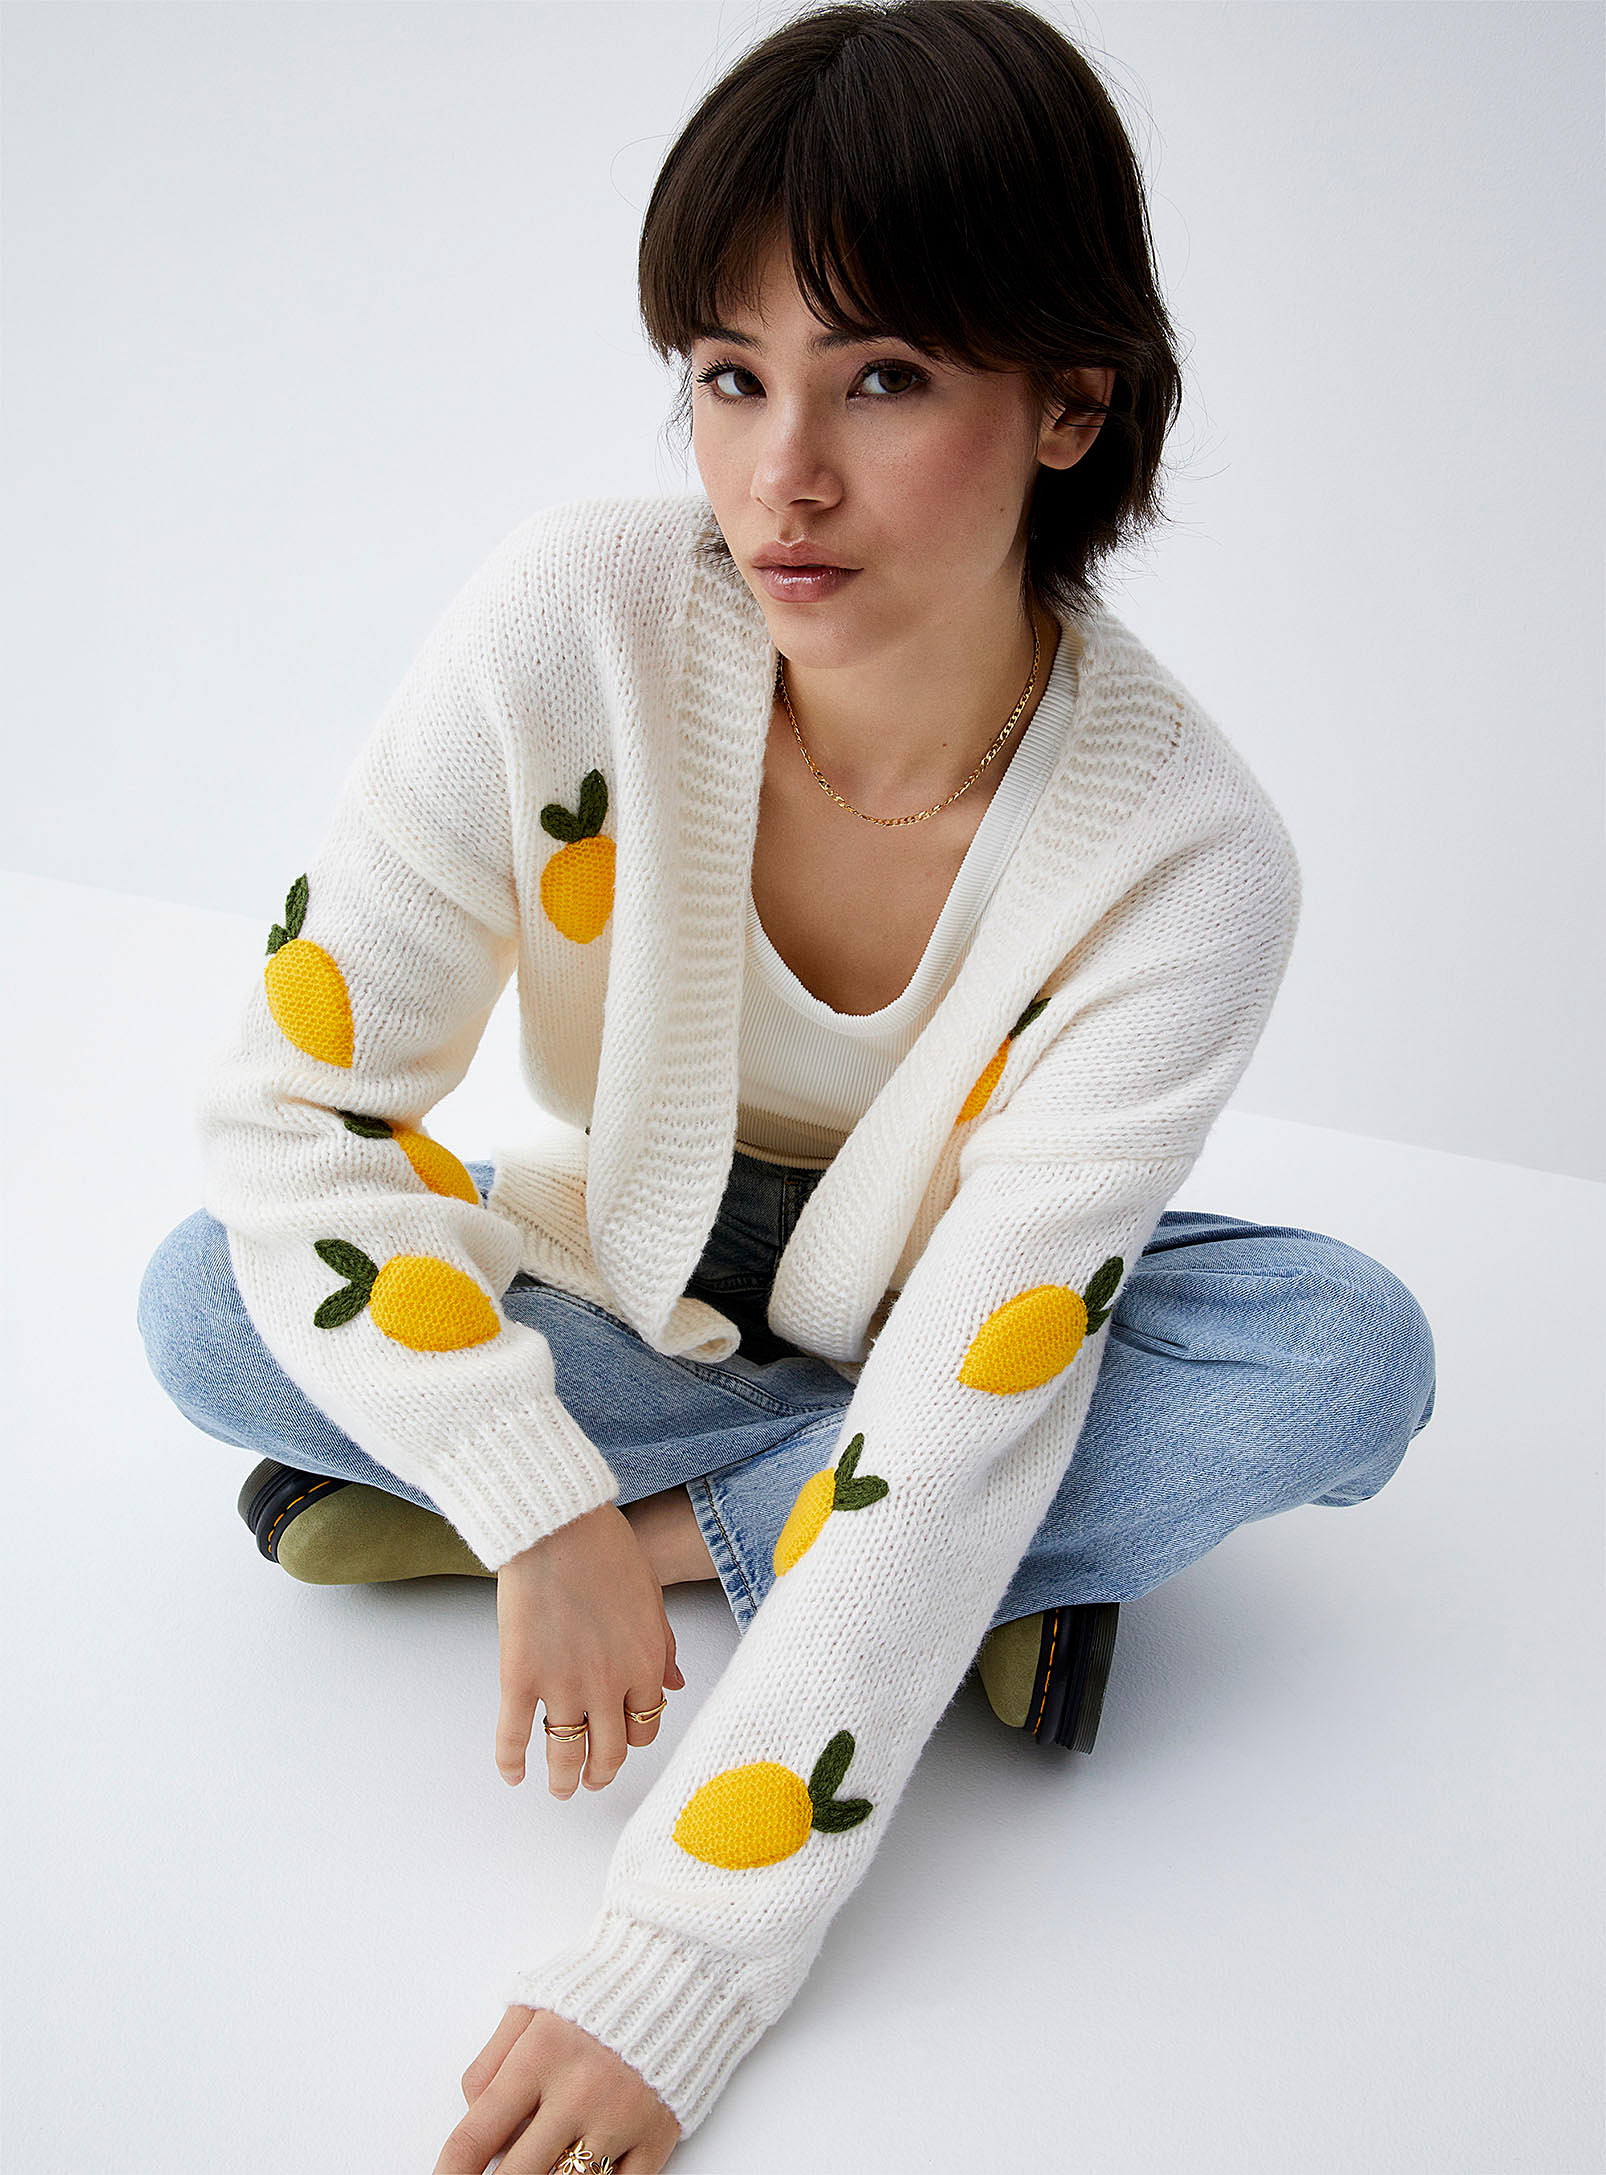 Twik - Women's Embroidered lemons Cardigan Sweater